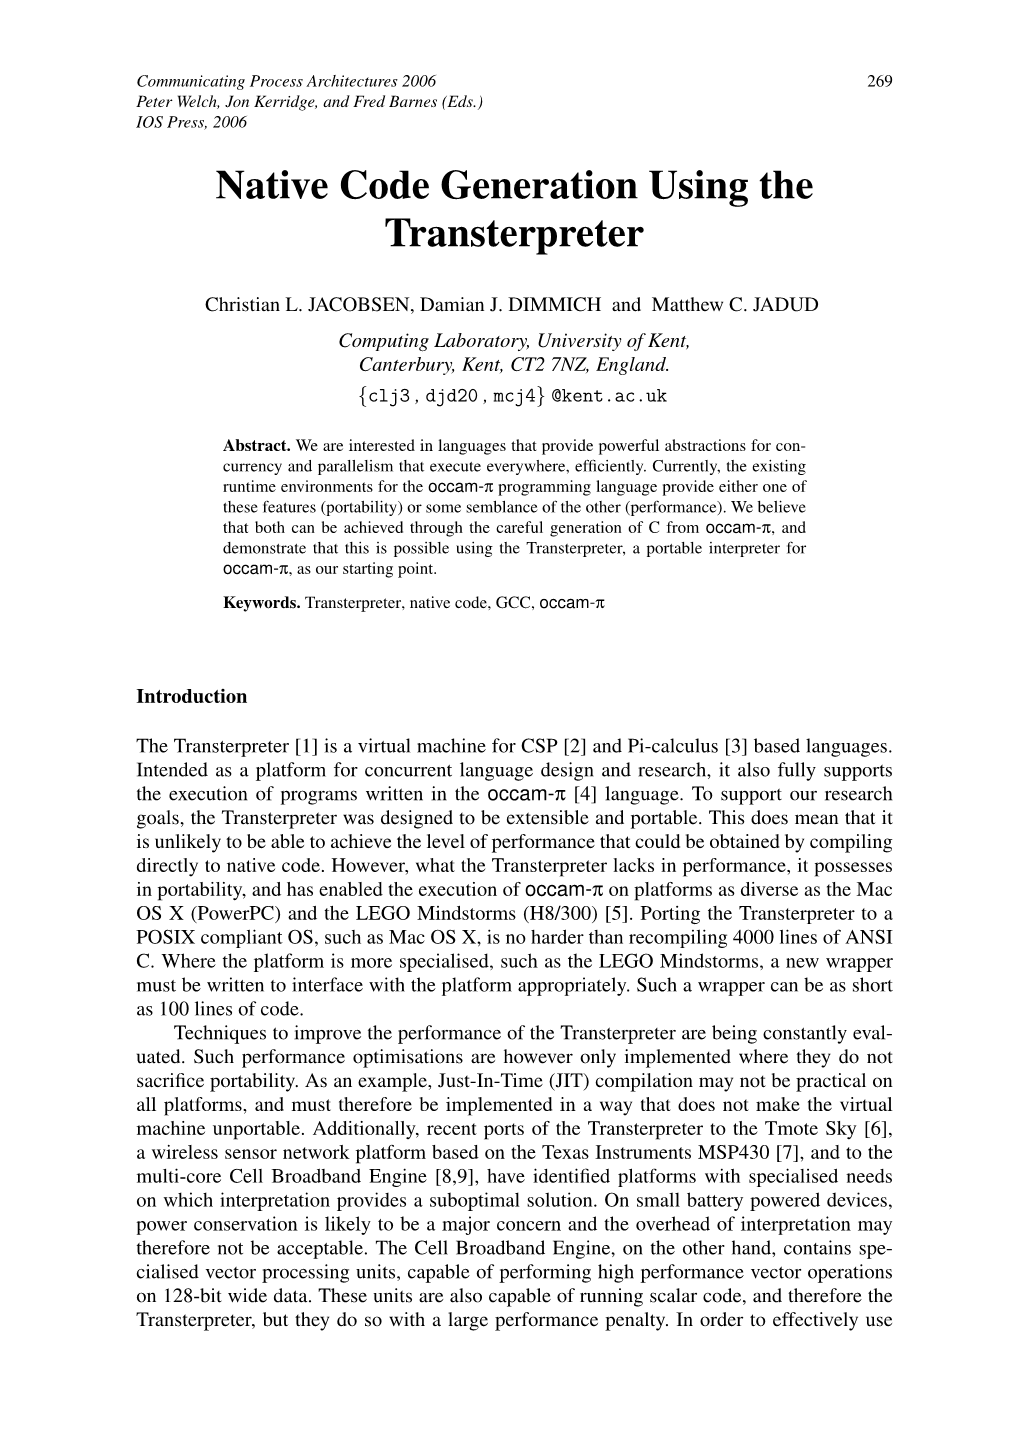 Native Code Generation Using the Transterpreter